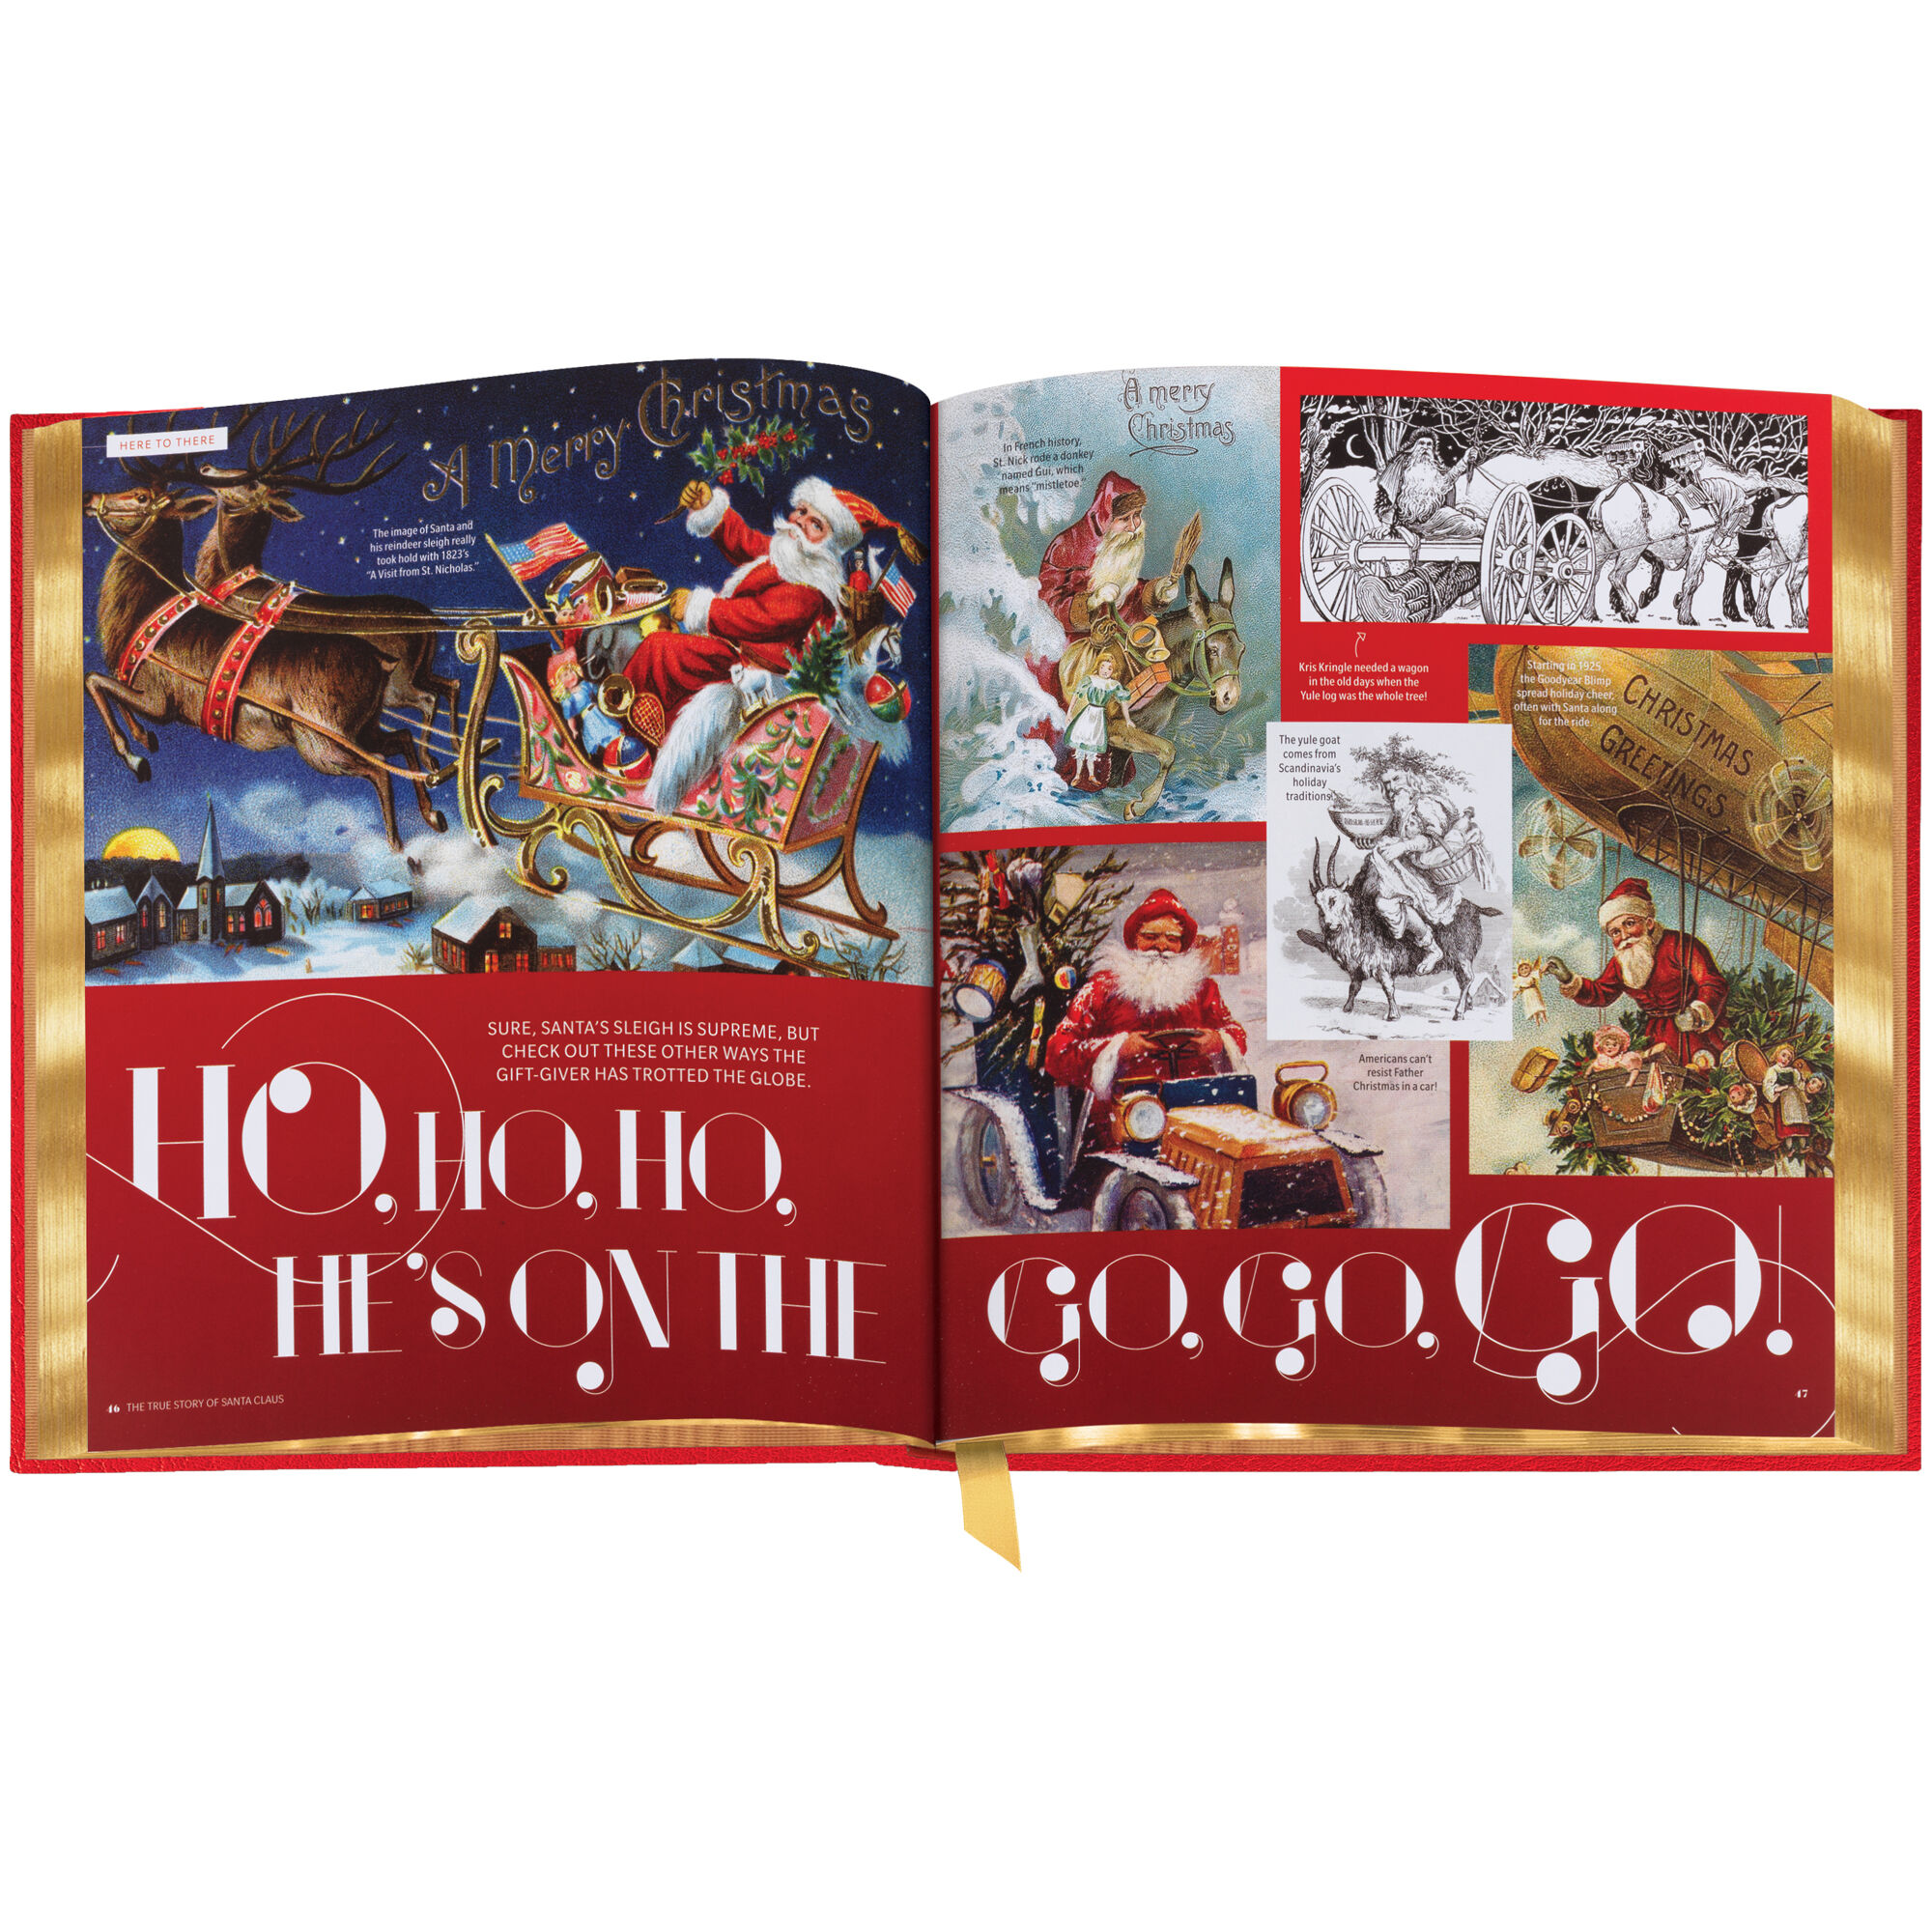 The Story of Santa Claus by Scribbler Elf